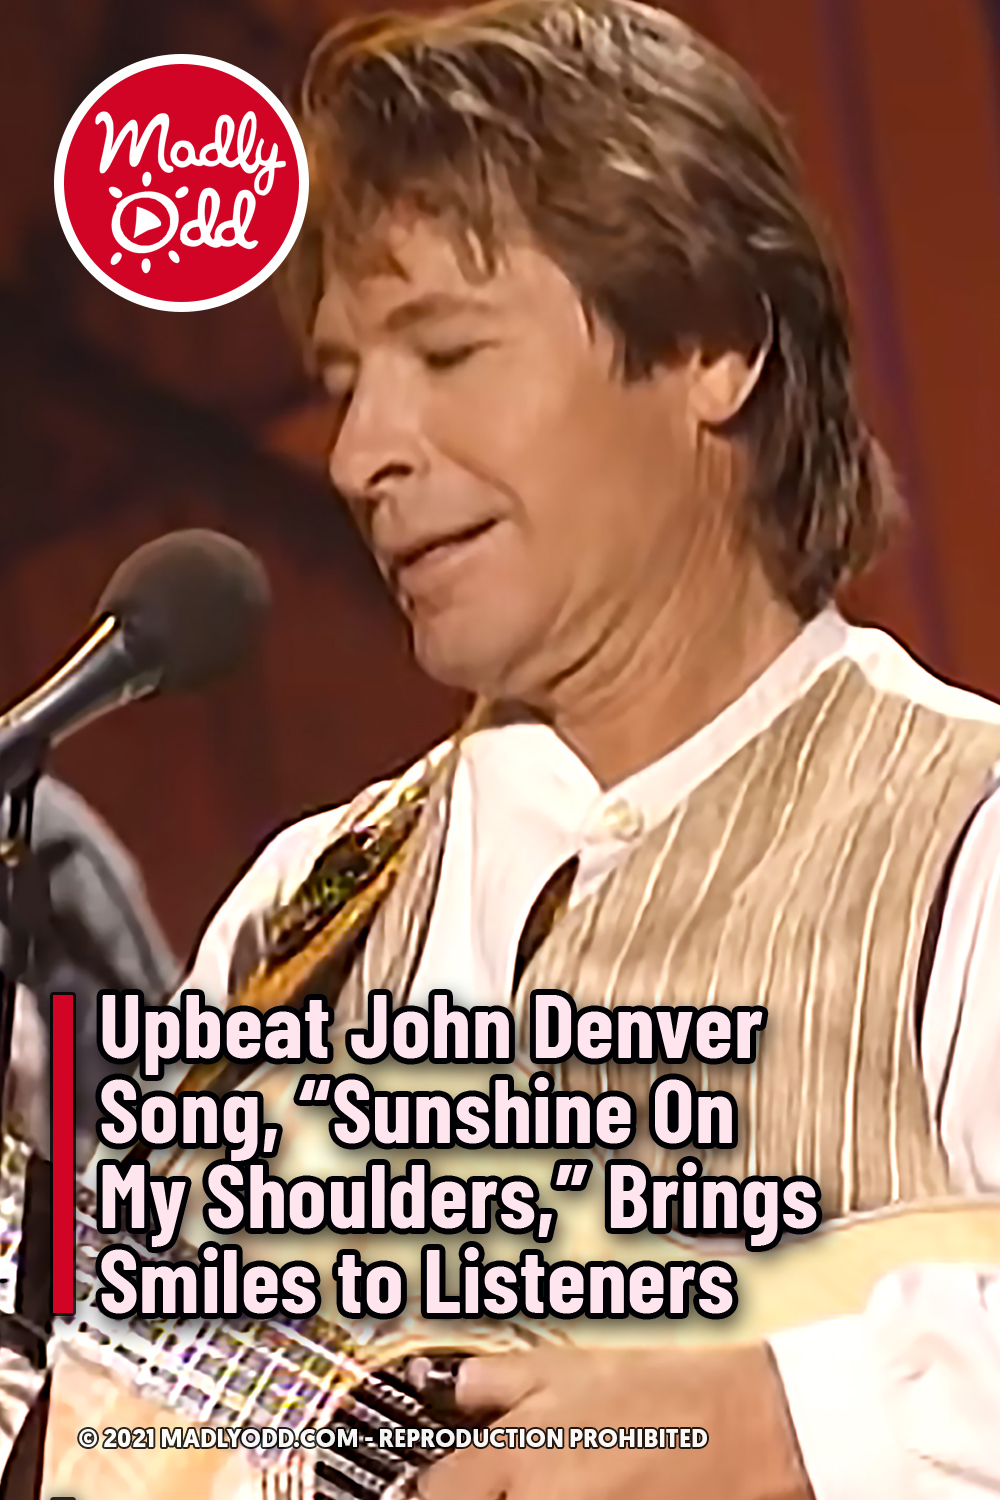 Upbeat John Denver Song, “Sunshine On My Shoulders,” Brings Smiles to Listeners